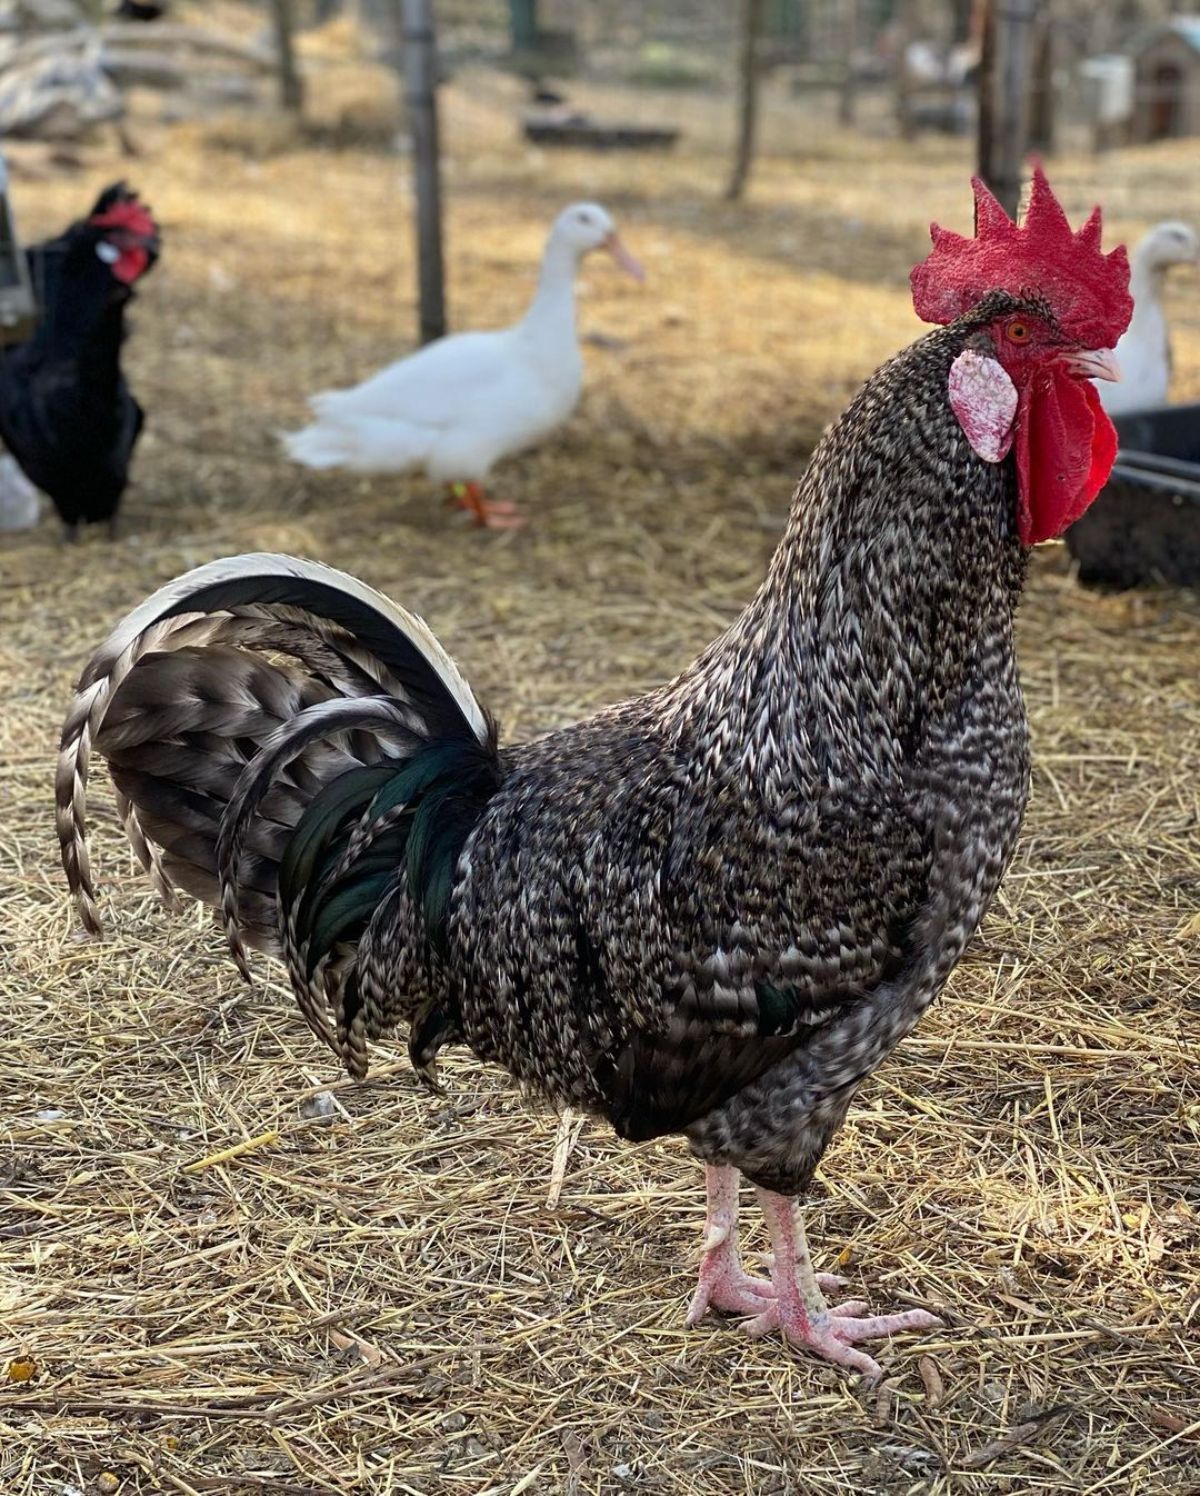 A beautiful Utrerana rooster in a backyard.